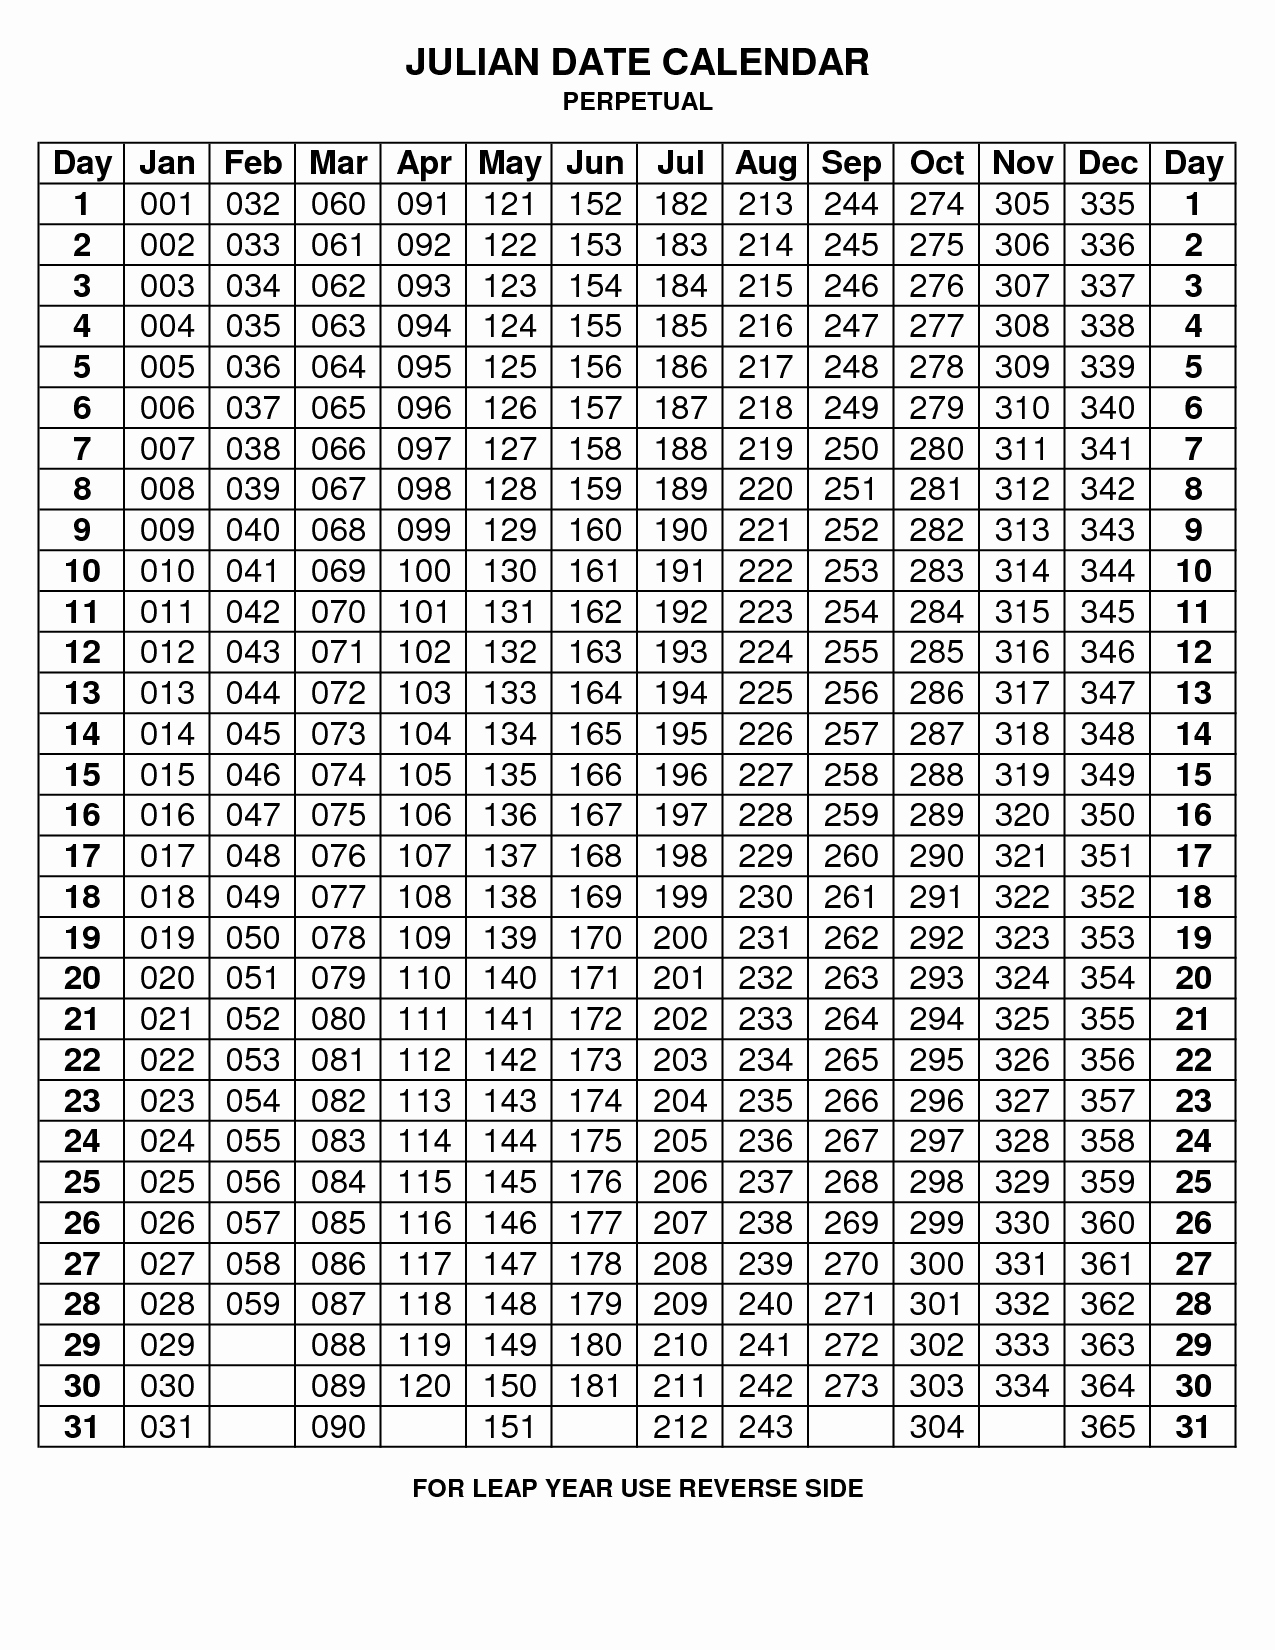 Depo Provera Perpetual Calendar To Print - Calendar  2021 Calender For Depo Shot